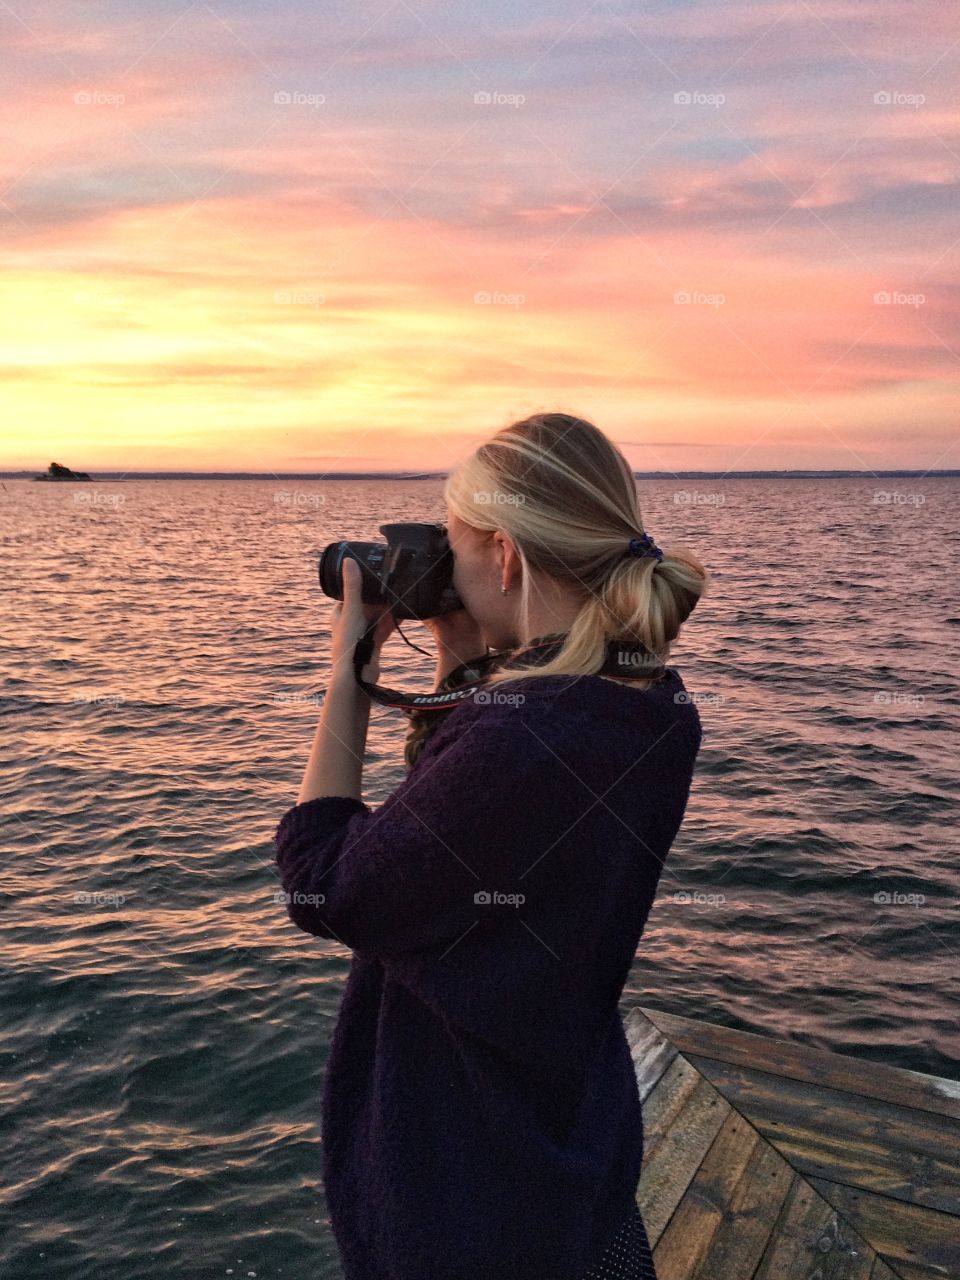 Women holding camera during sunset